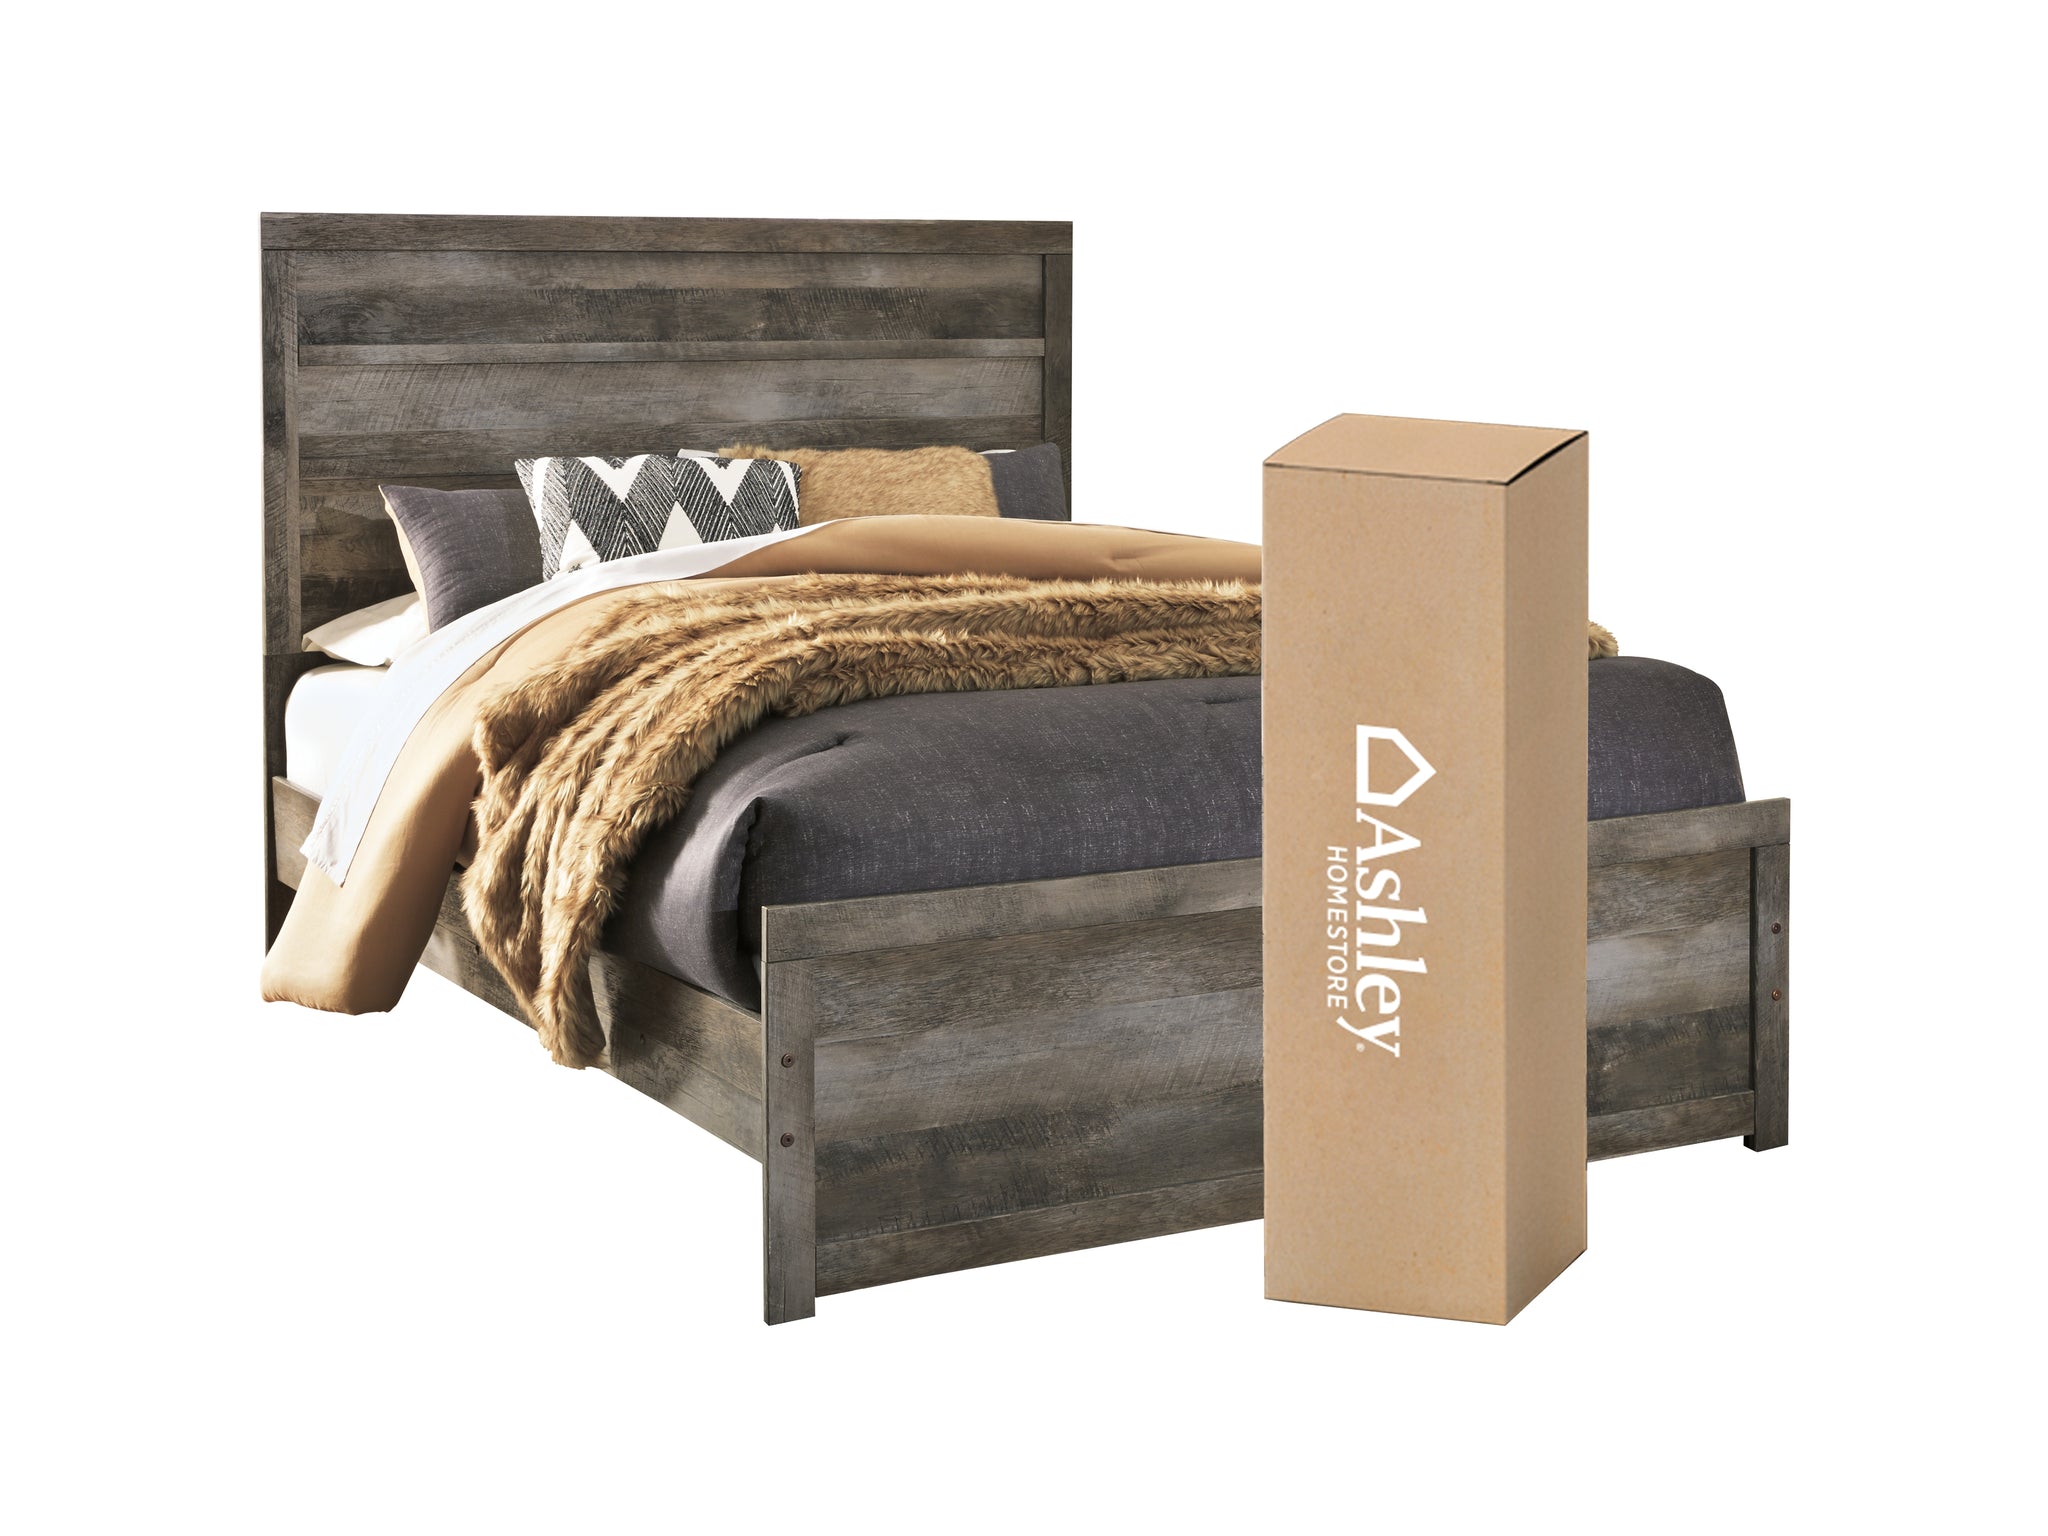 Wynnlow Signature Design 4-Piece Bedroom Set with 8-inch Memory Foam Mattress